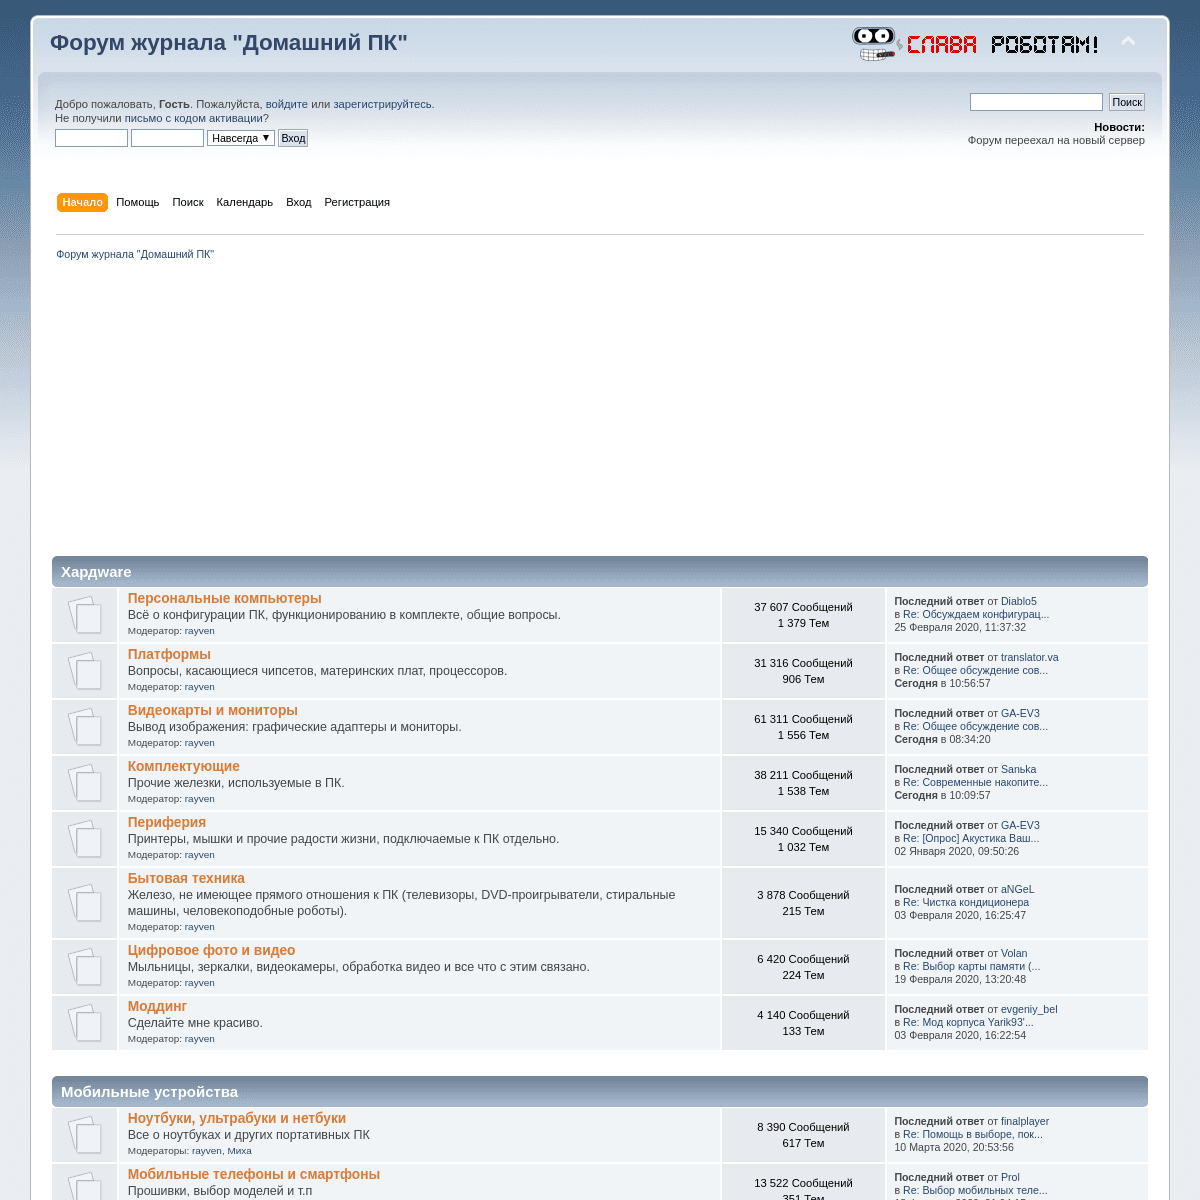 A complete backup of dpk-forum.com